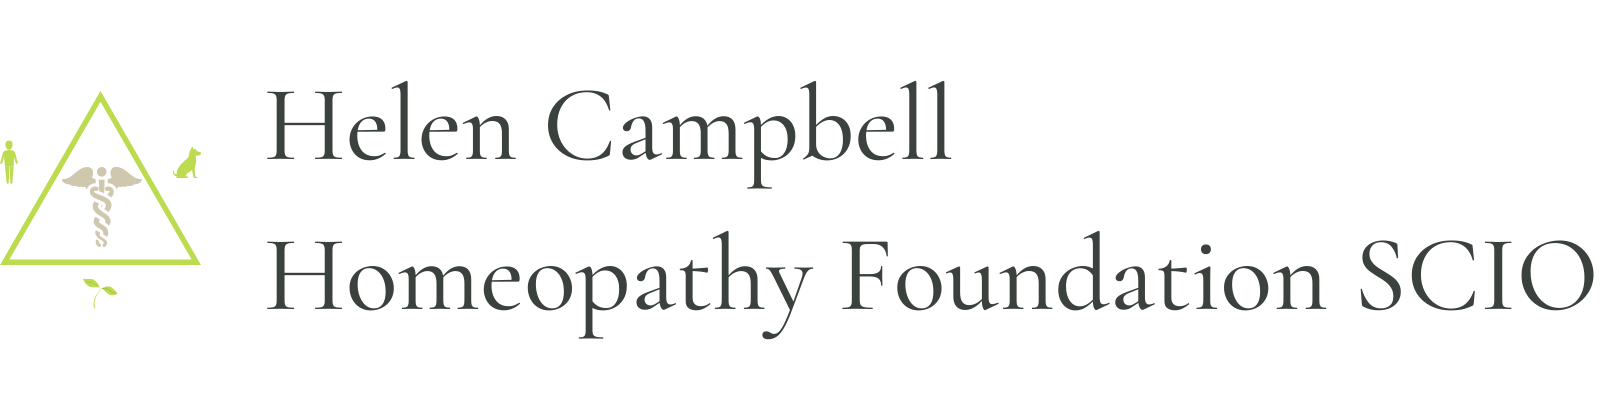 Helen Campbell Homeopathy Foundation SCIO Woman Healing Logo